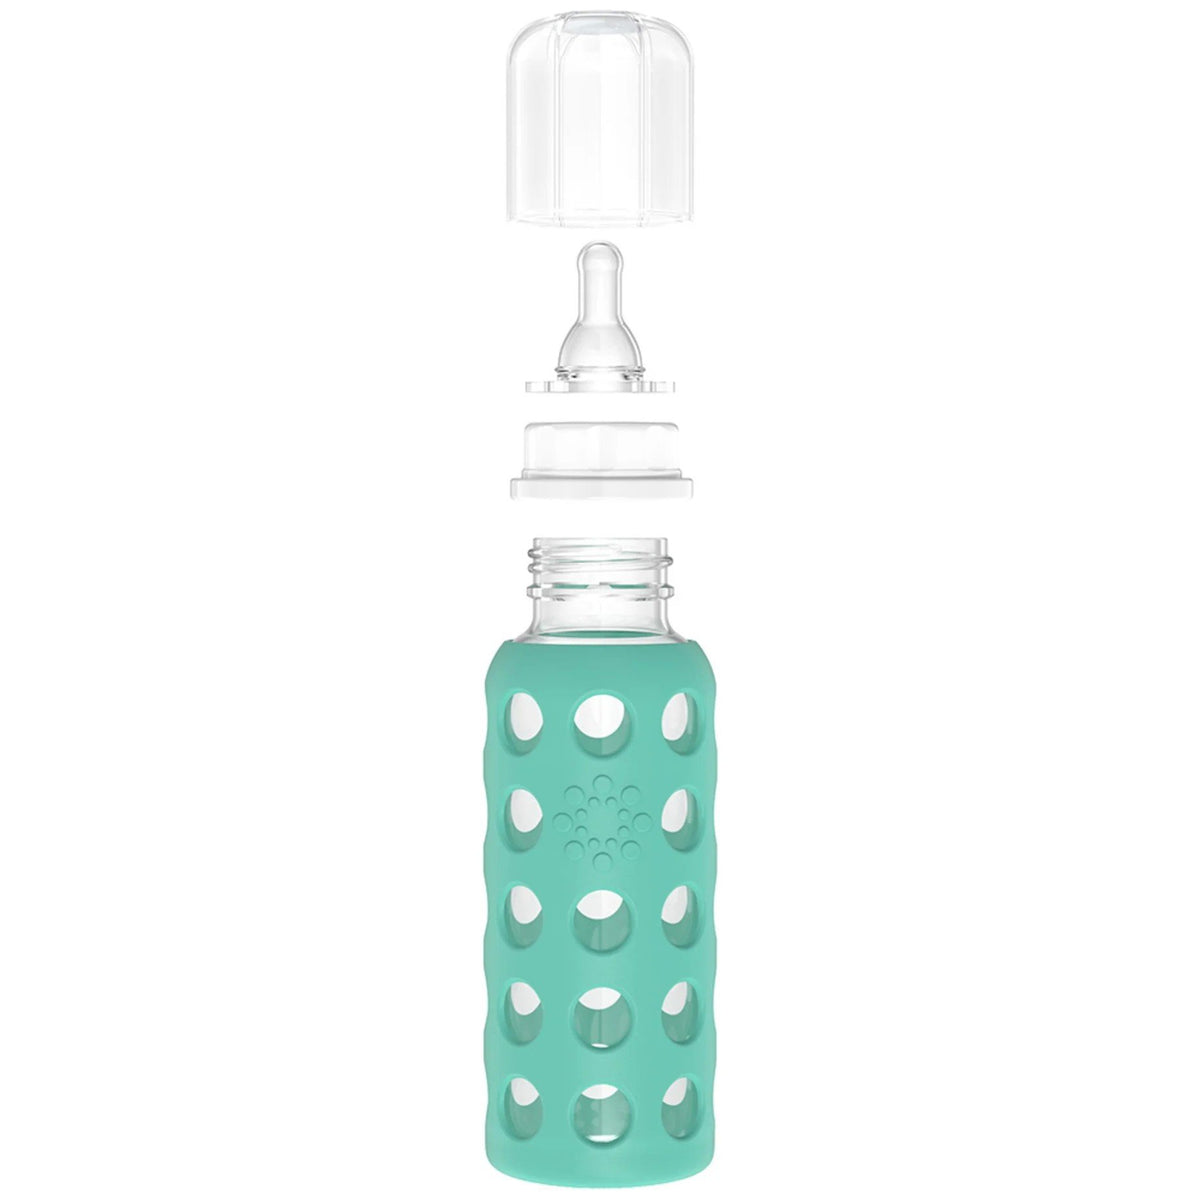 Lifefactory Glass Baby Bottle Kale 9 oz Bottle